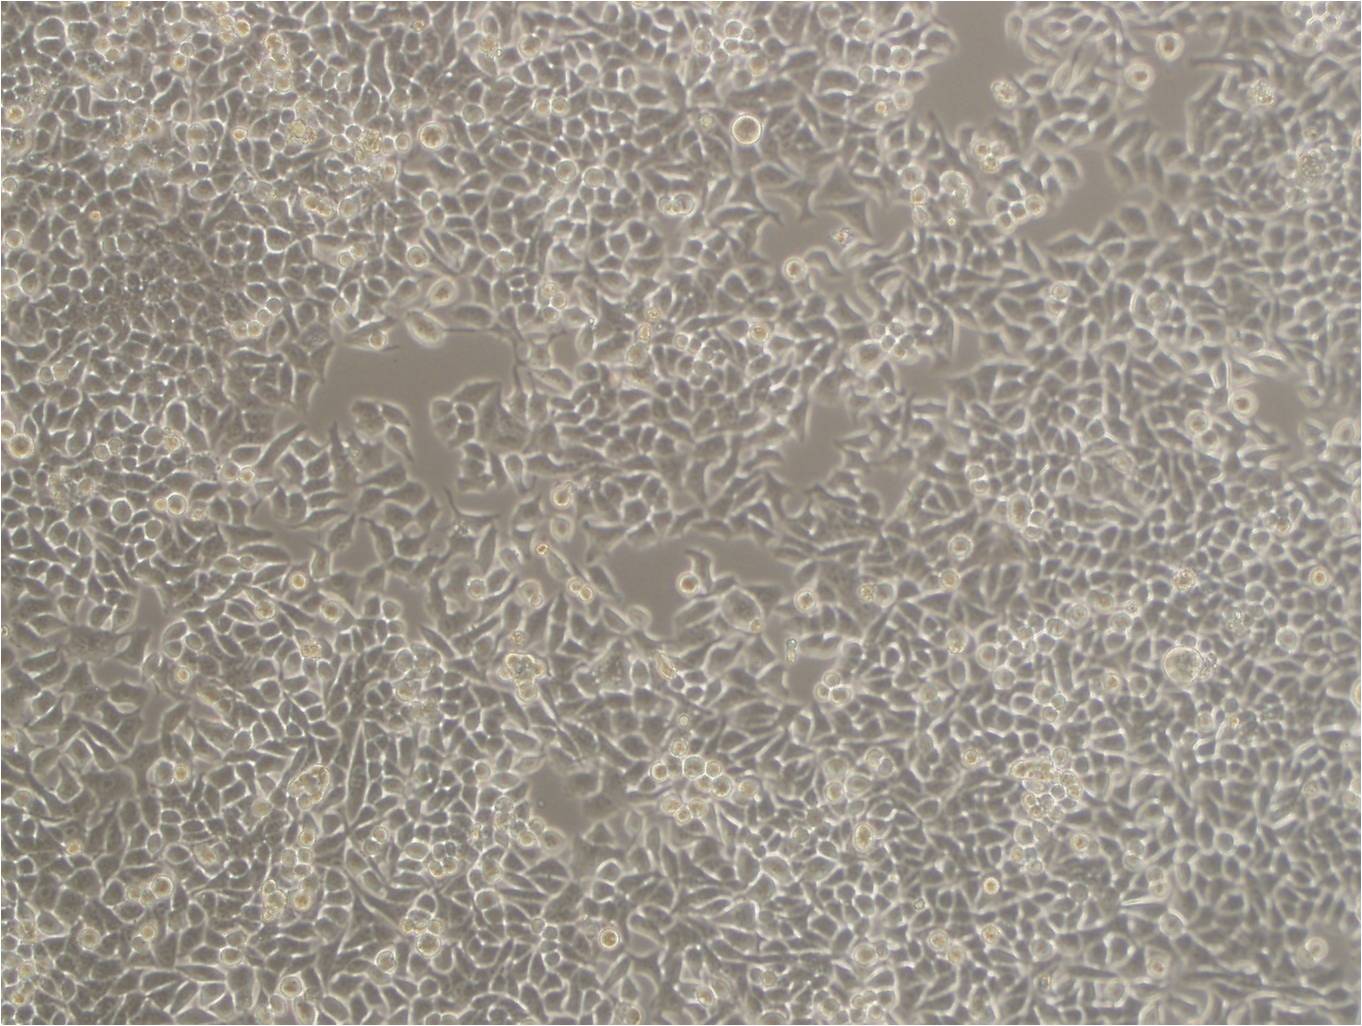 SUM190PT epithelioid cells人乳腺癌细胞系